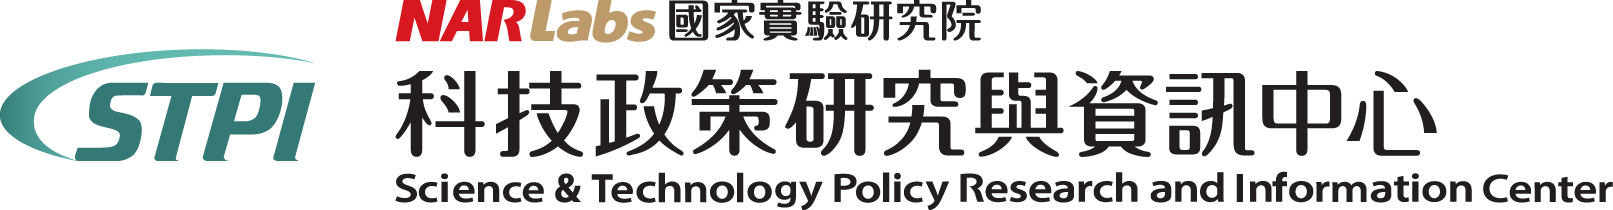 中心logo(中+英)2.png